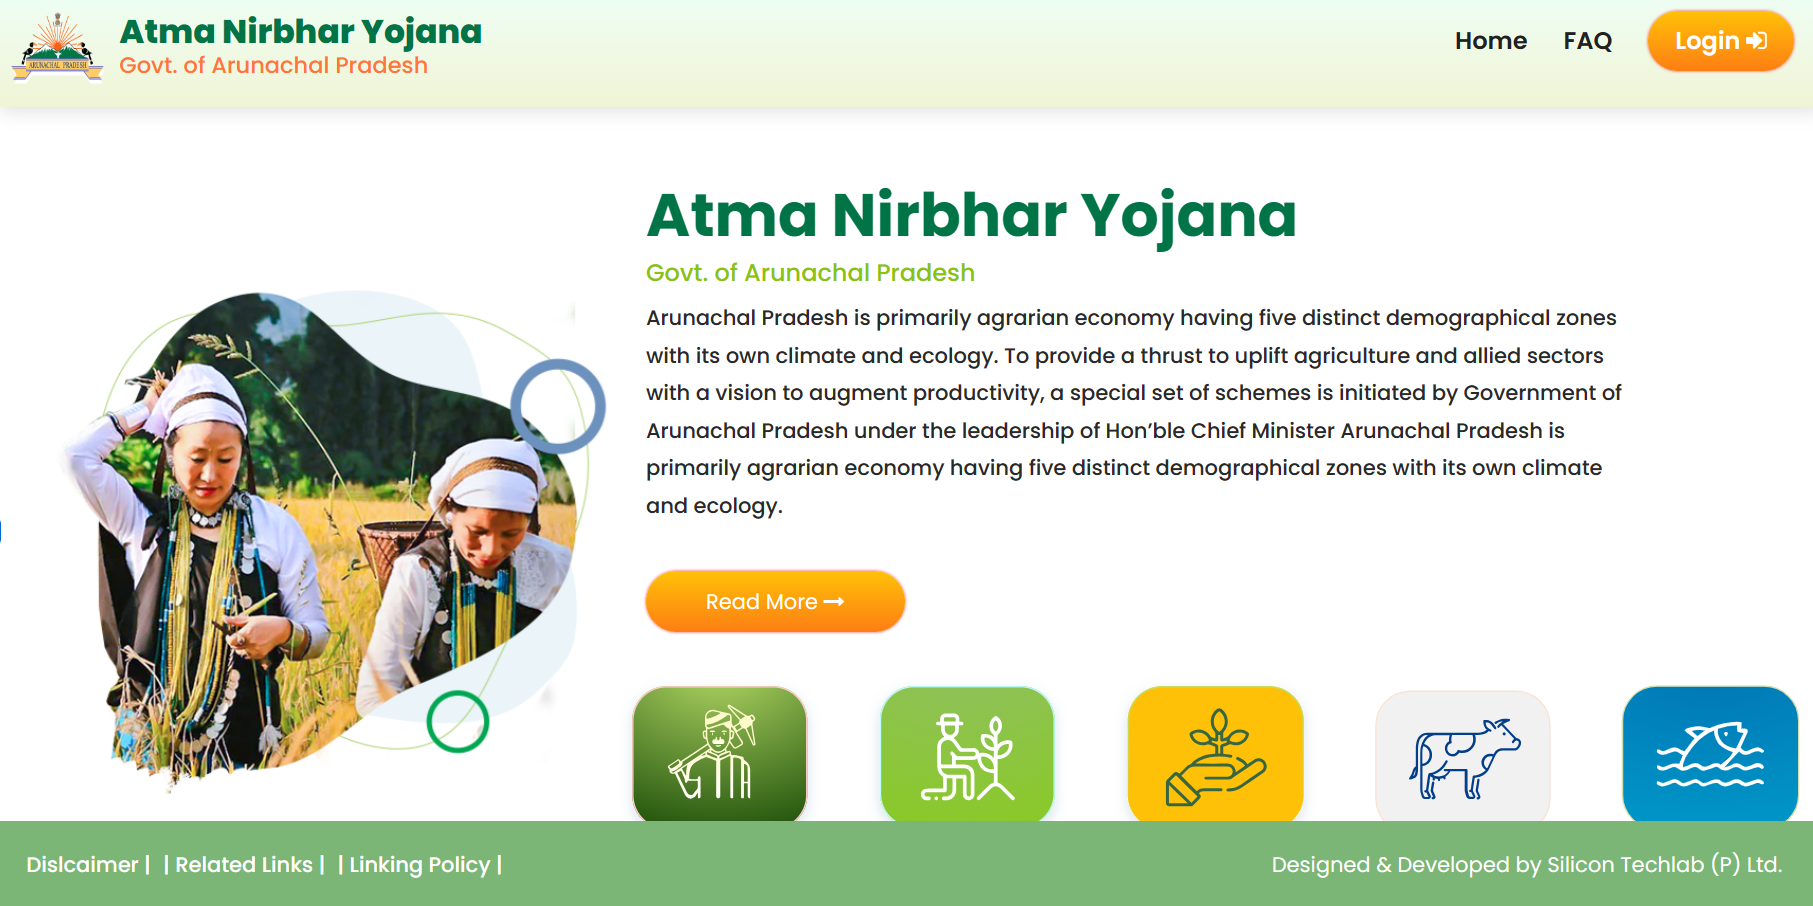 Arunachal Pradesh Launches Aatmanirbhar Yojana Portal for Streamlined Access